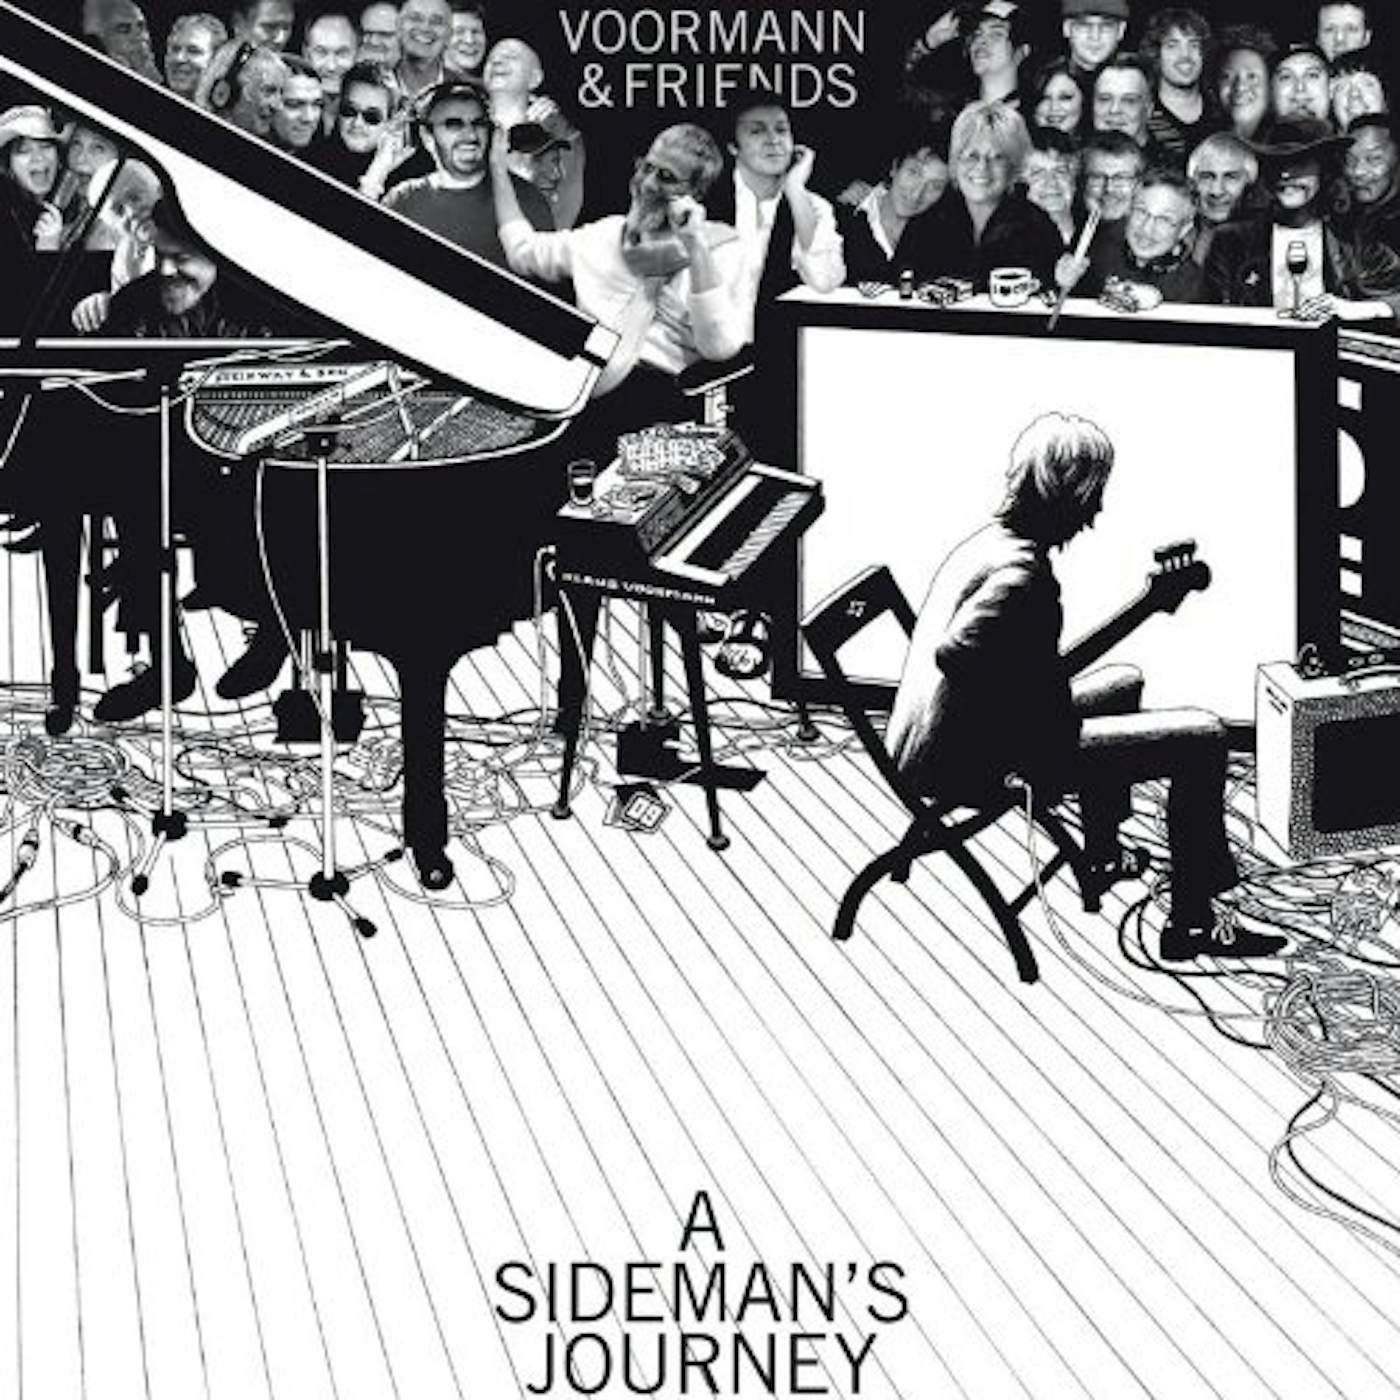 Voormann & Friends SIDEMAN'S JOURNEY (LTD) (Vinyl)